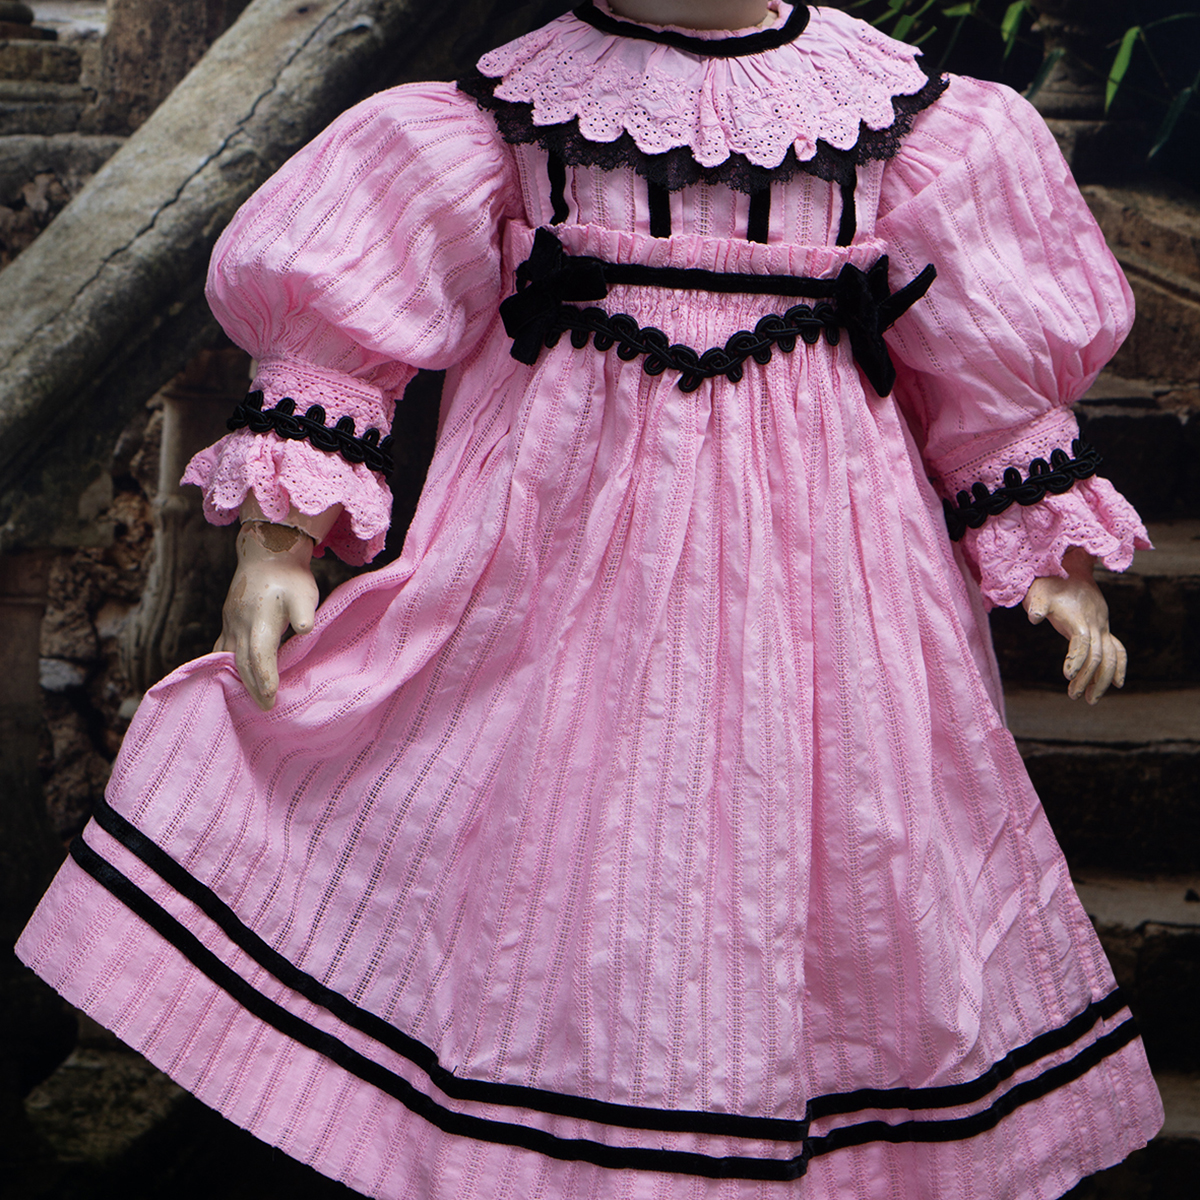 Antique doll dress for bebe doll 25-26